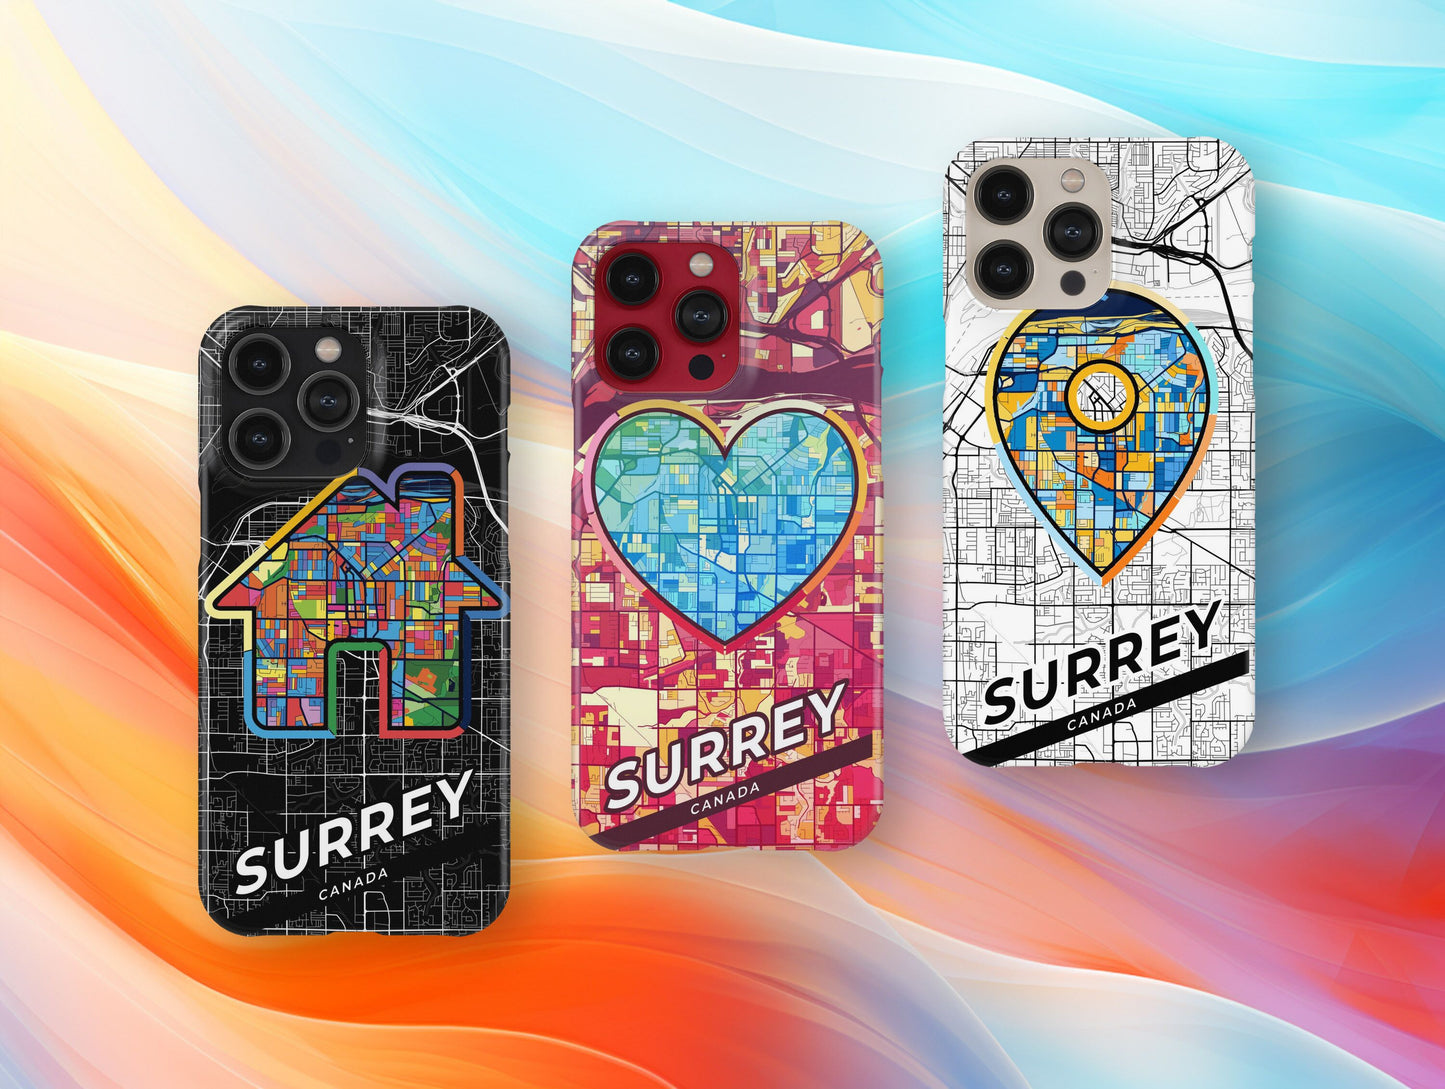 Surrey Canada slim phone case with colorful icon